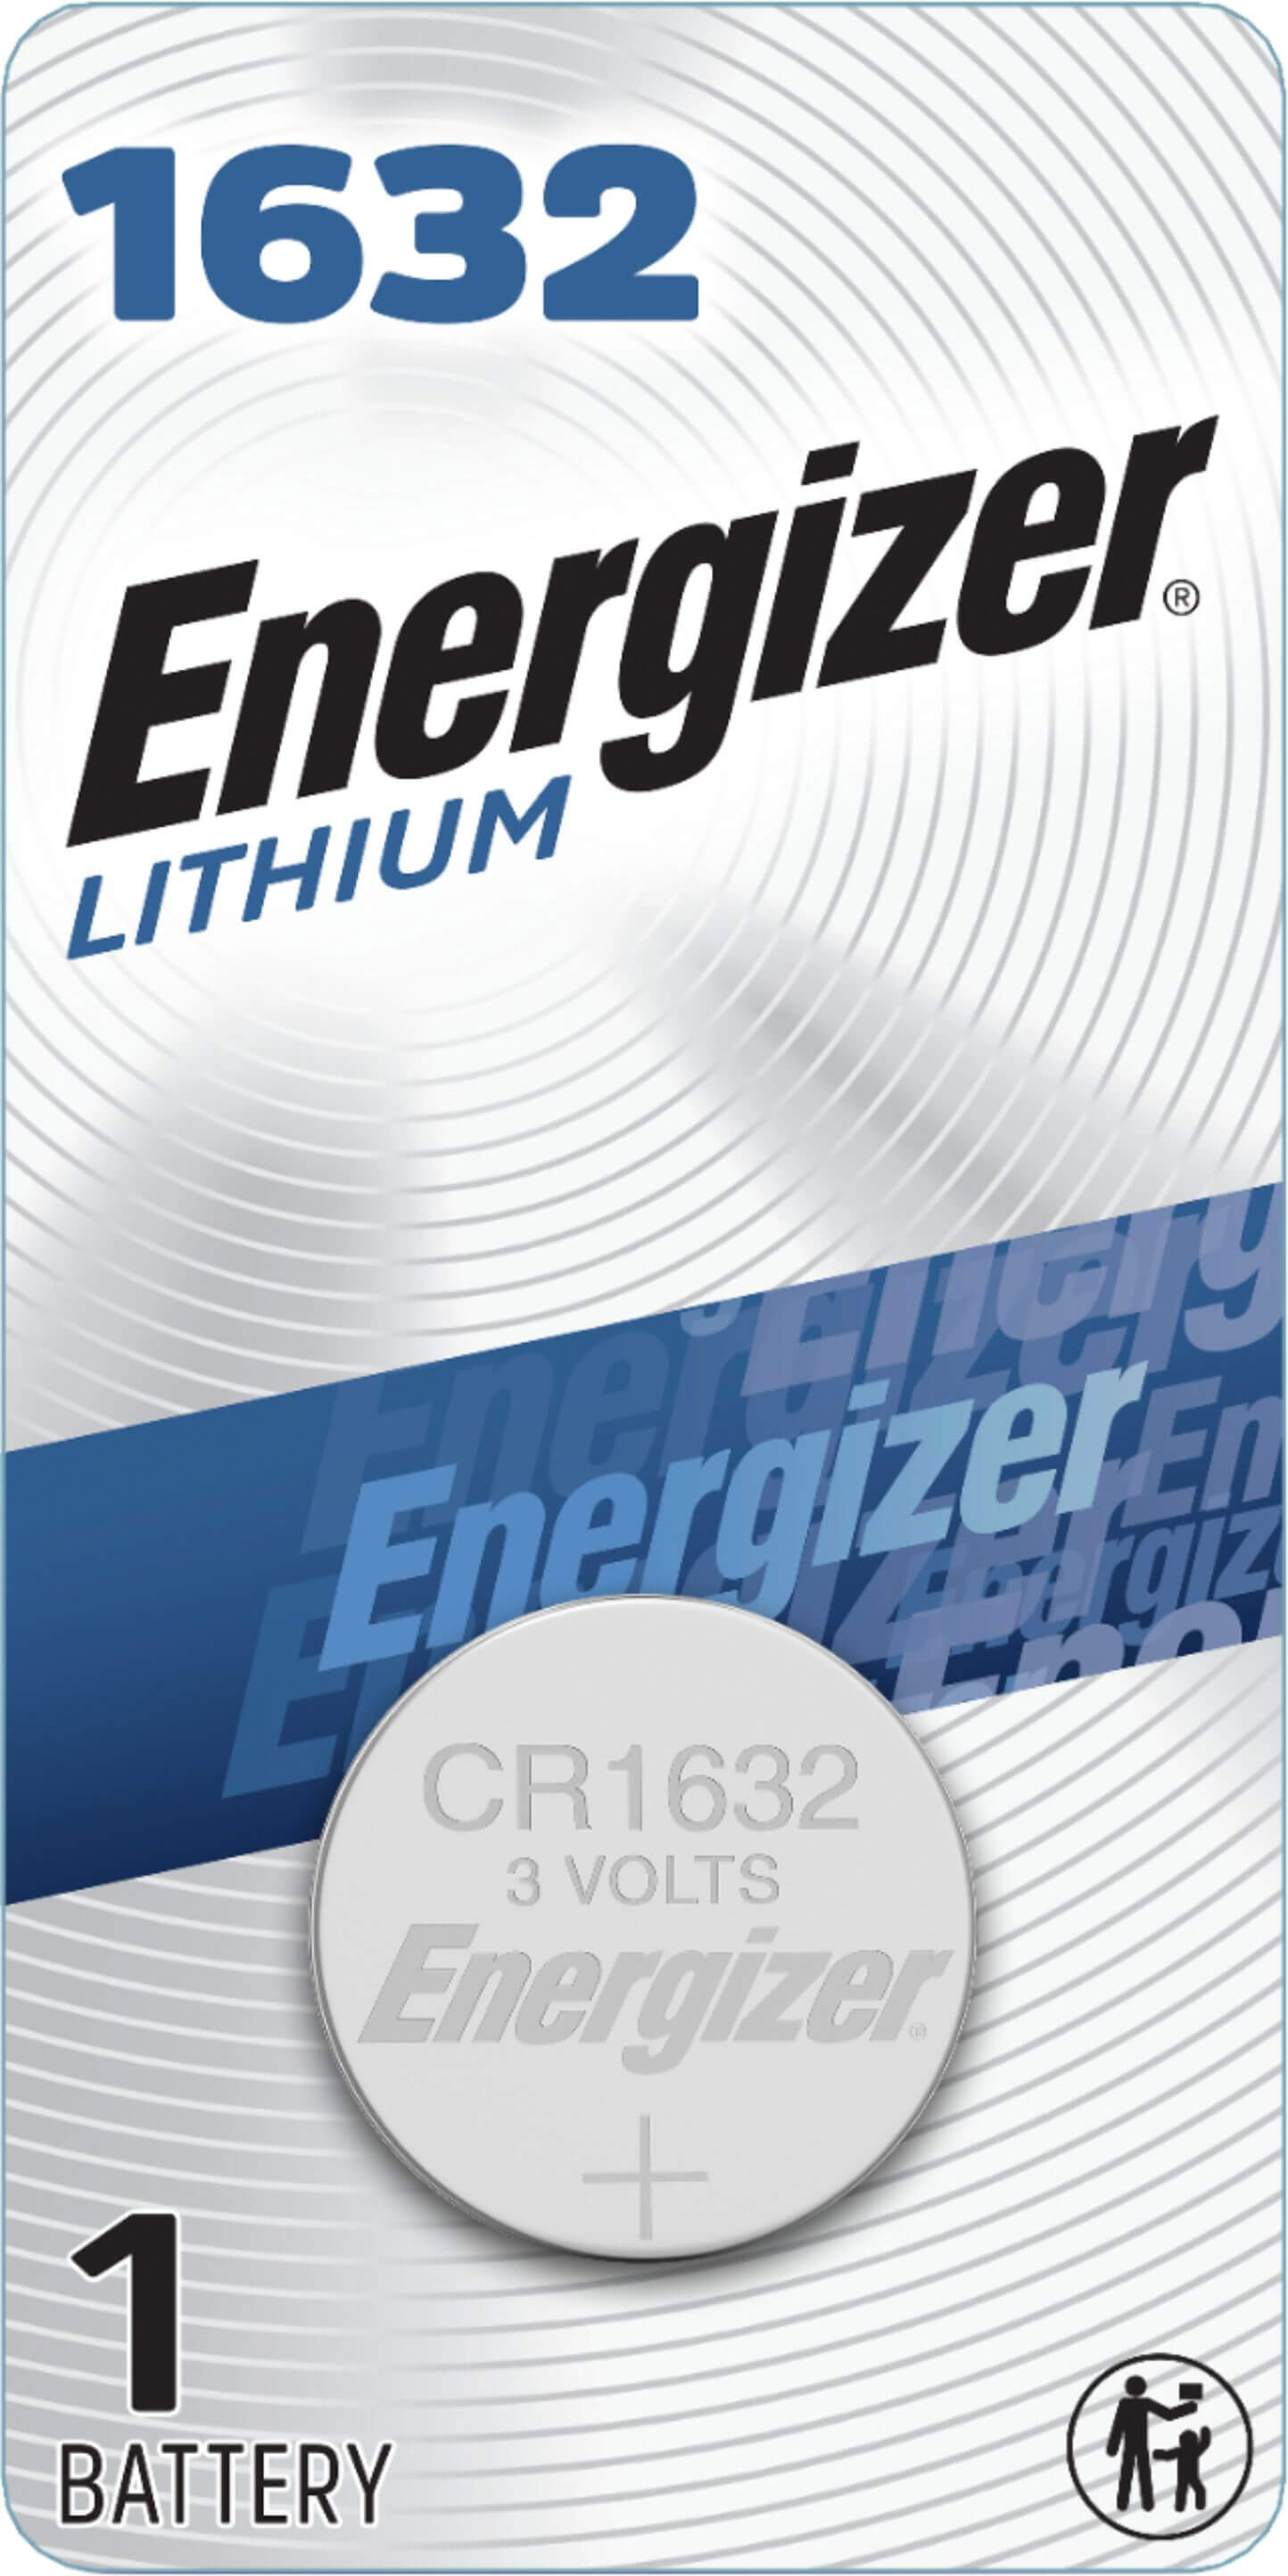 ENERGIZER BATTERY LITHIUM CR1632